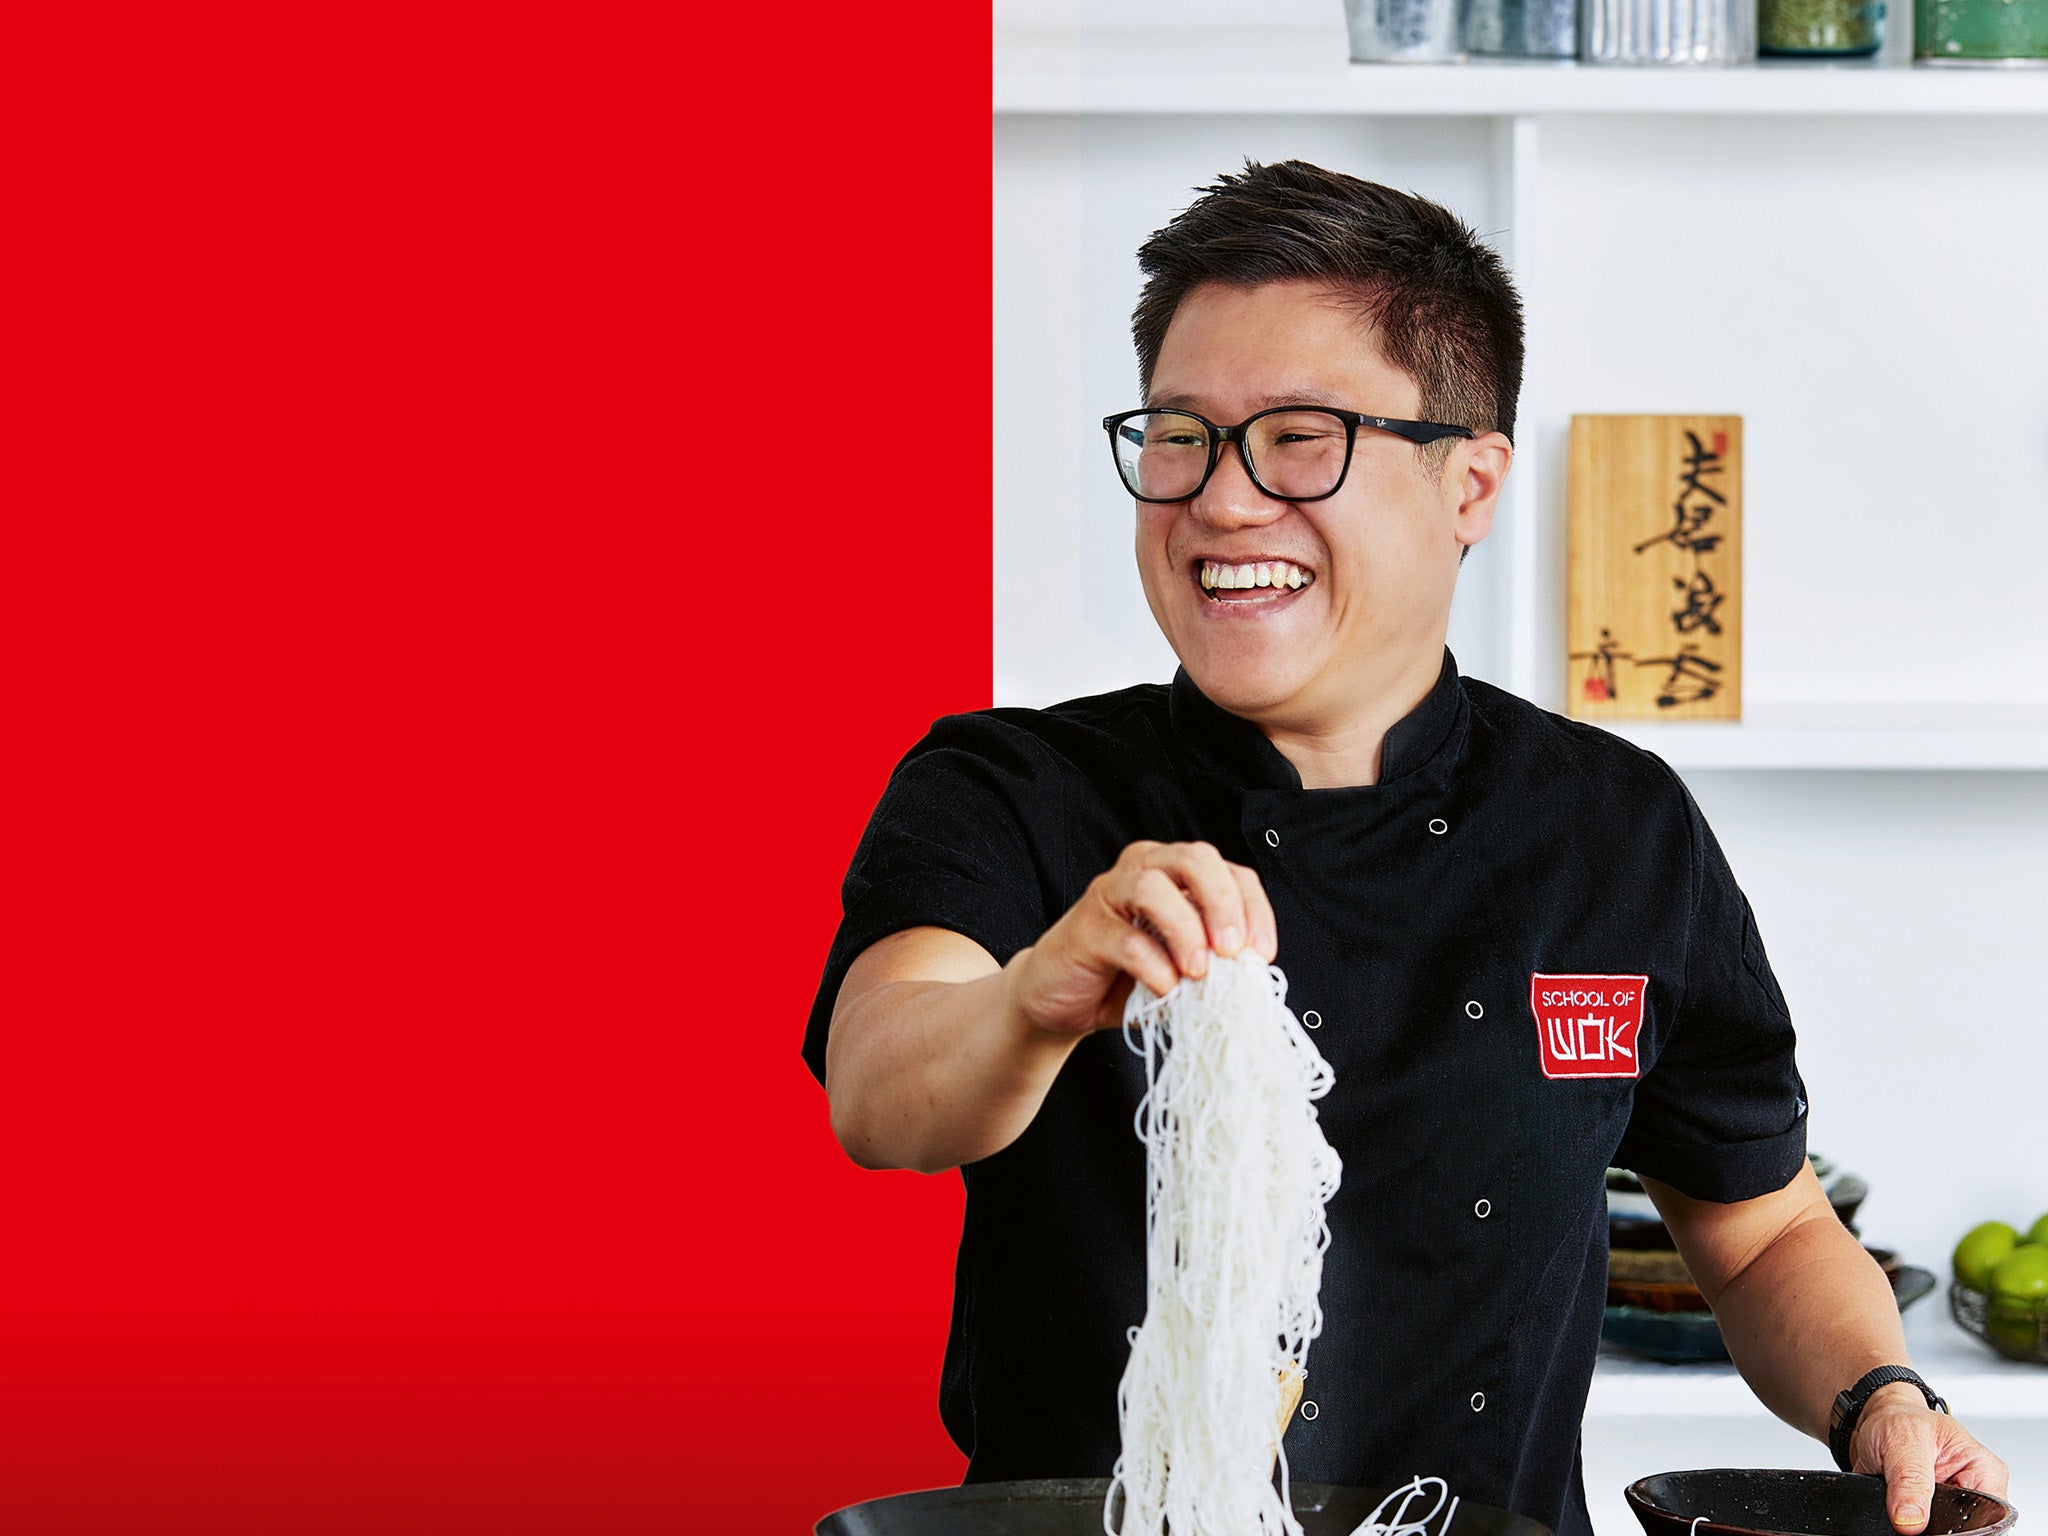 The Chinese-British chef runs the School of Wok in London